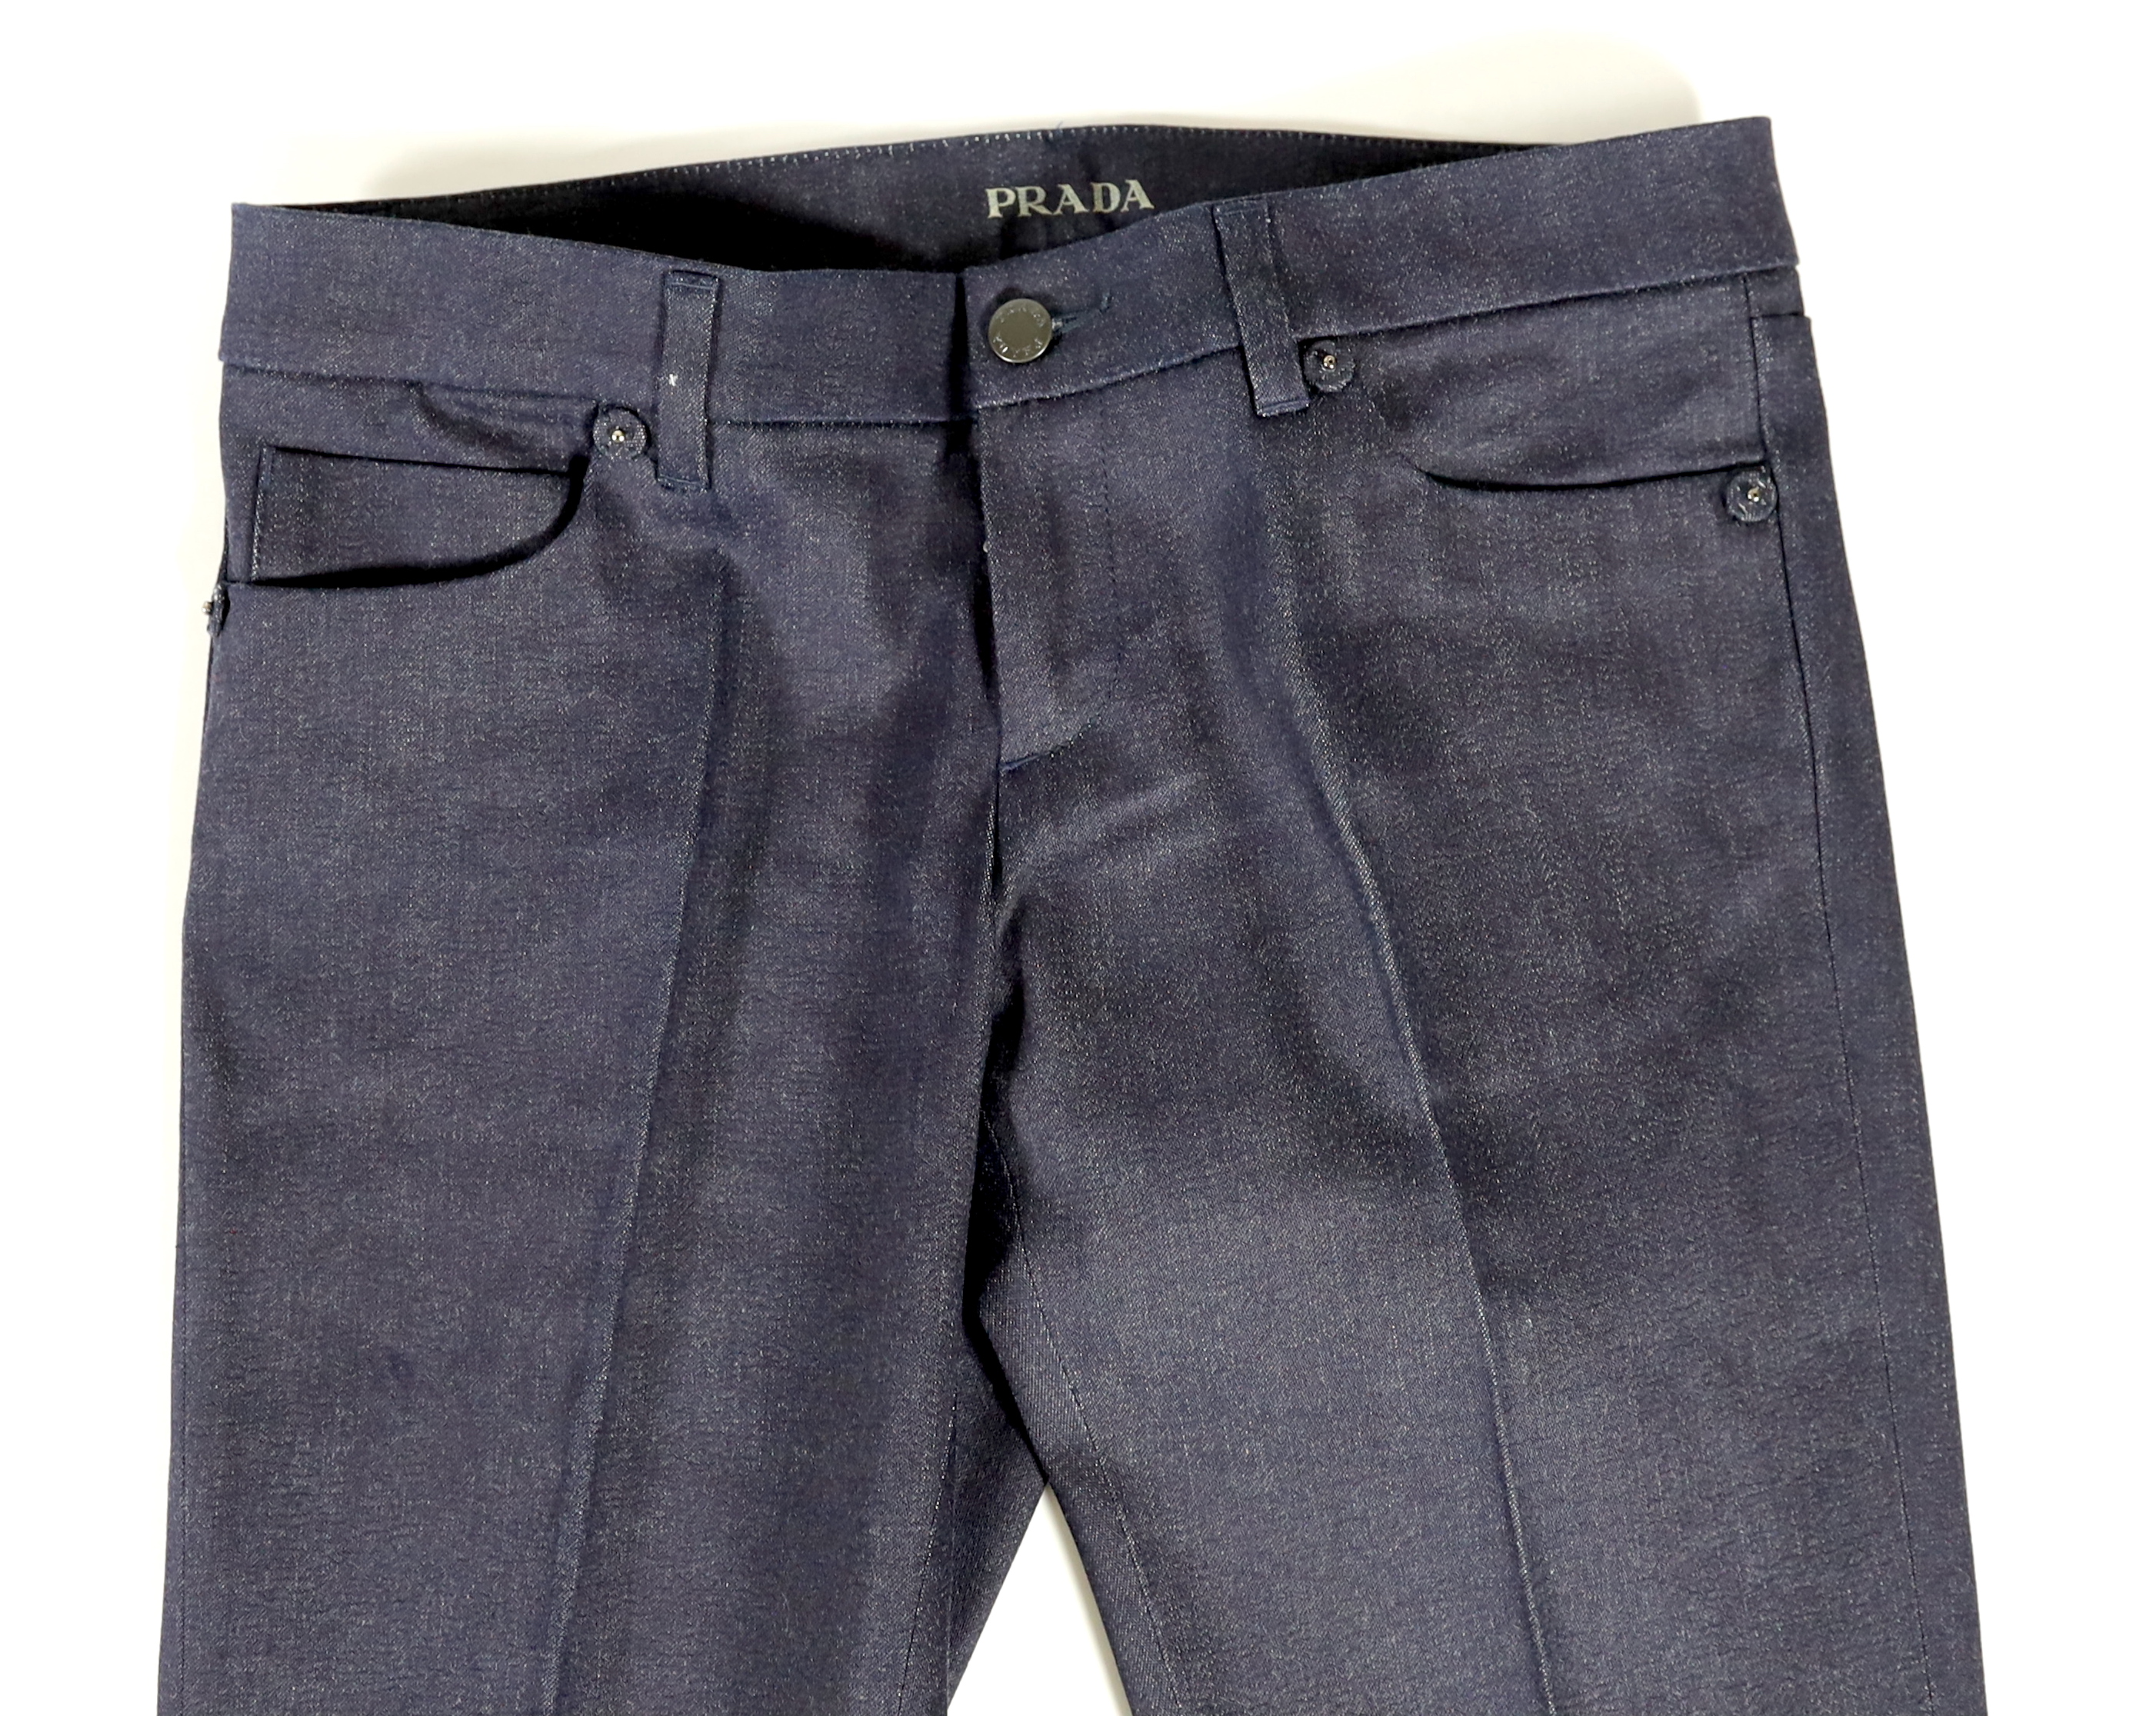 Three pairs of Prada lady's jeans